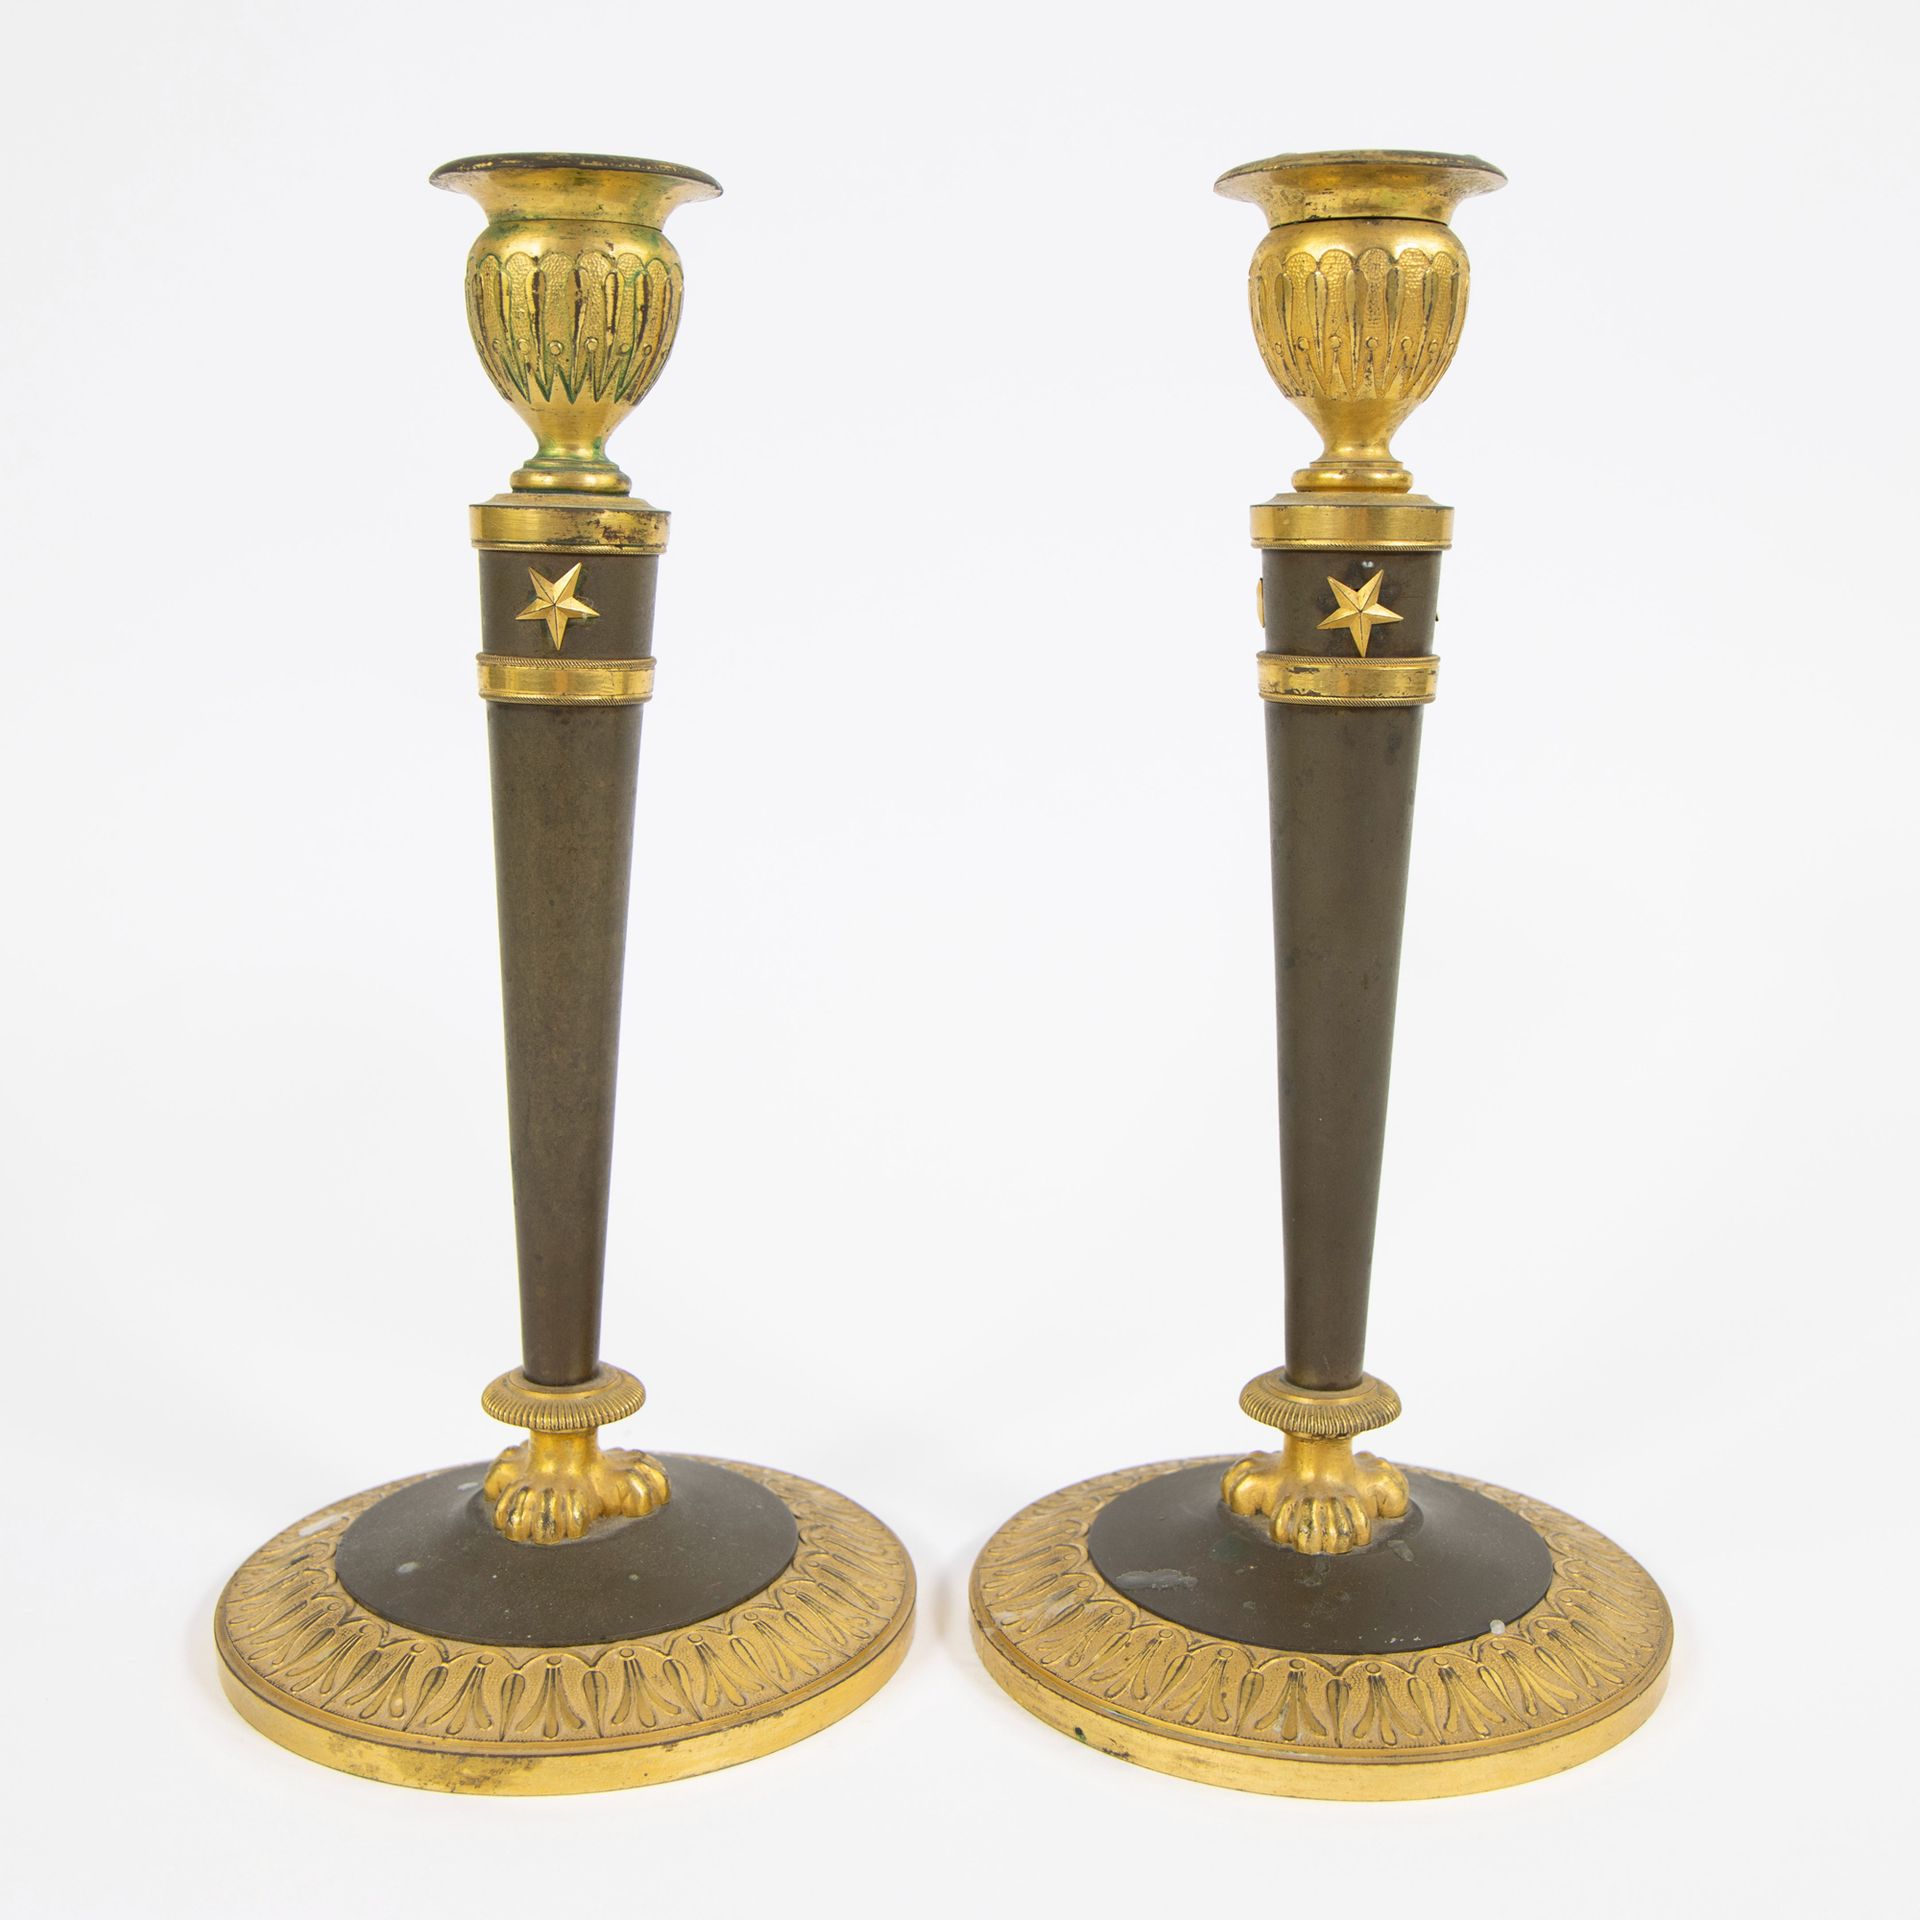 Null Coppia di candelieri Impero dorati, Francia, XIX secolo
Koppel vergulde Emp&hellip;